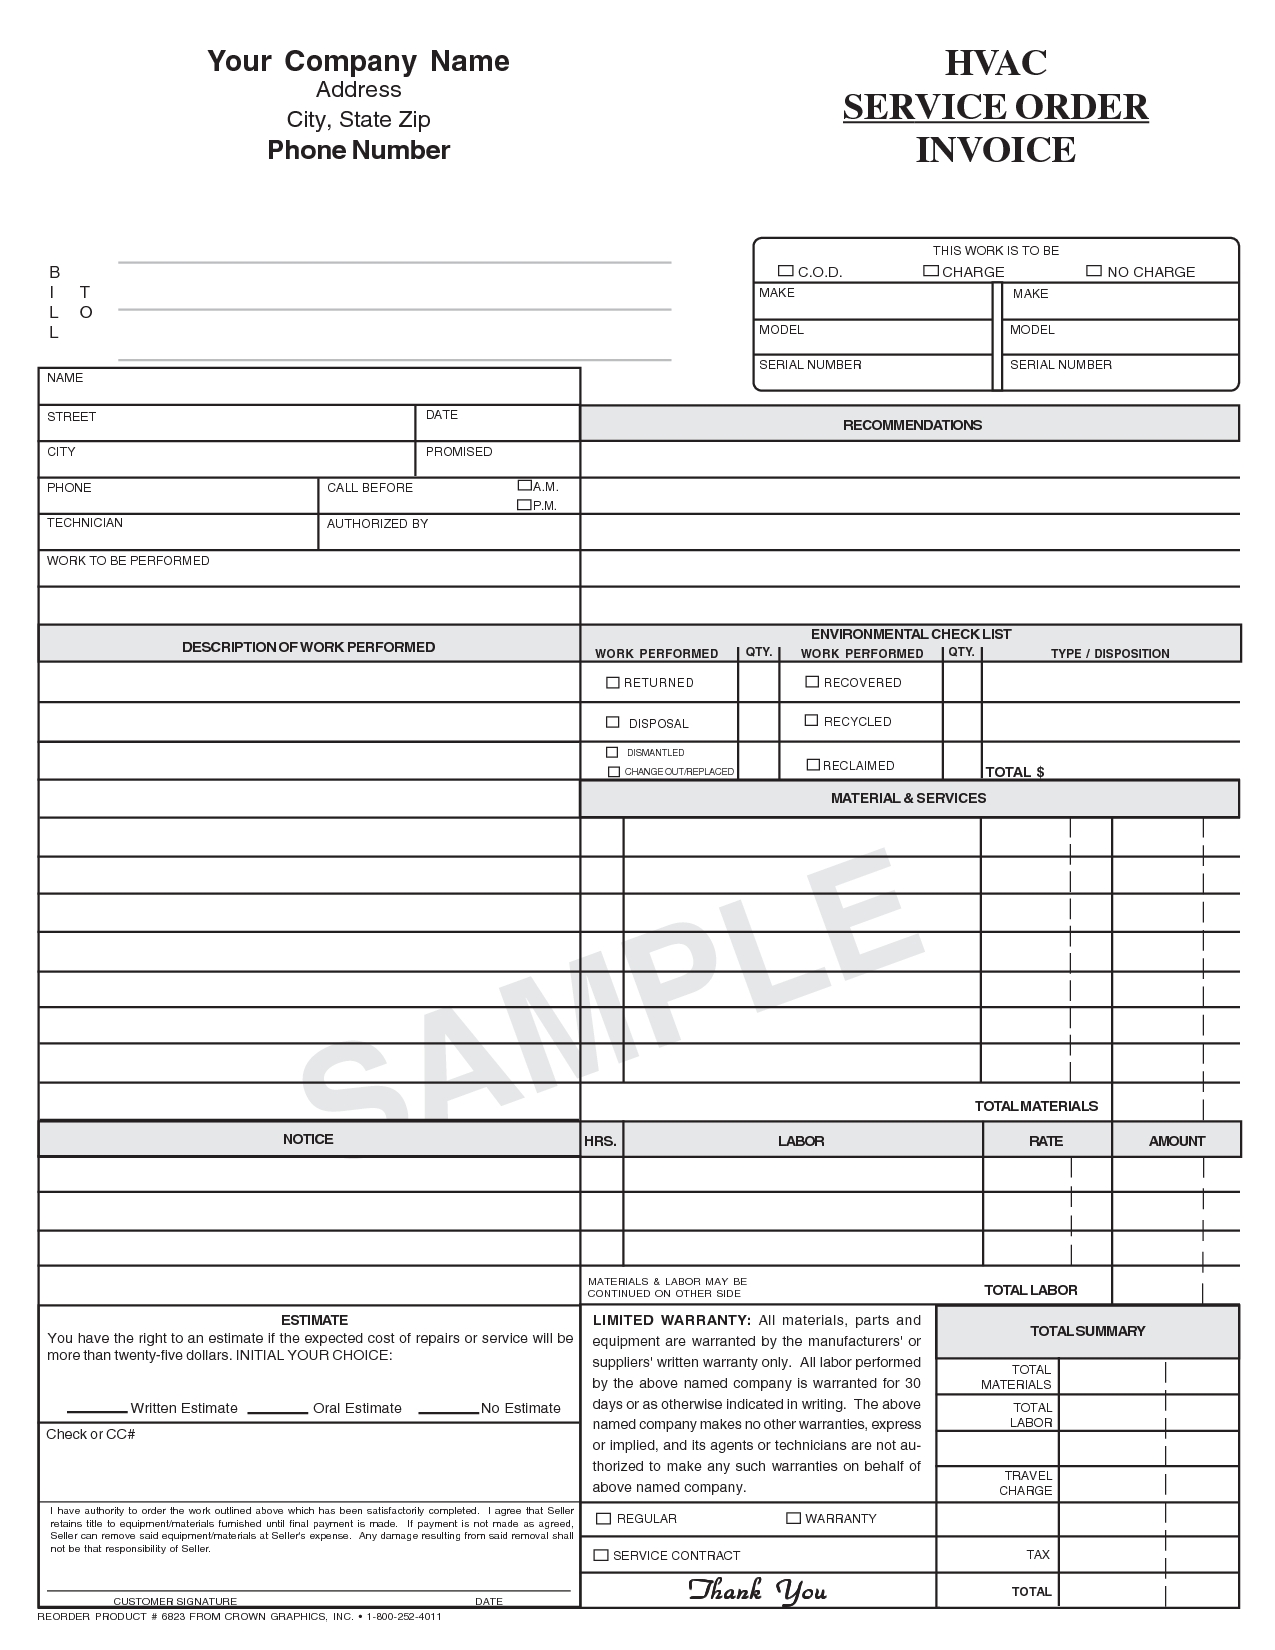 hvac invoice sample free hvac invoice template excel pdf hvac service invoice